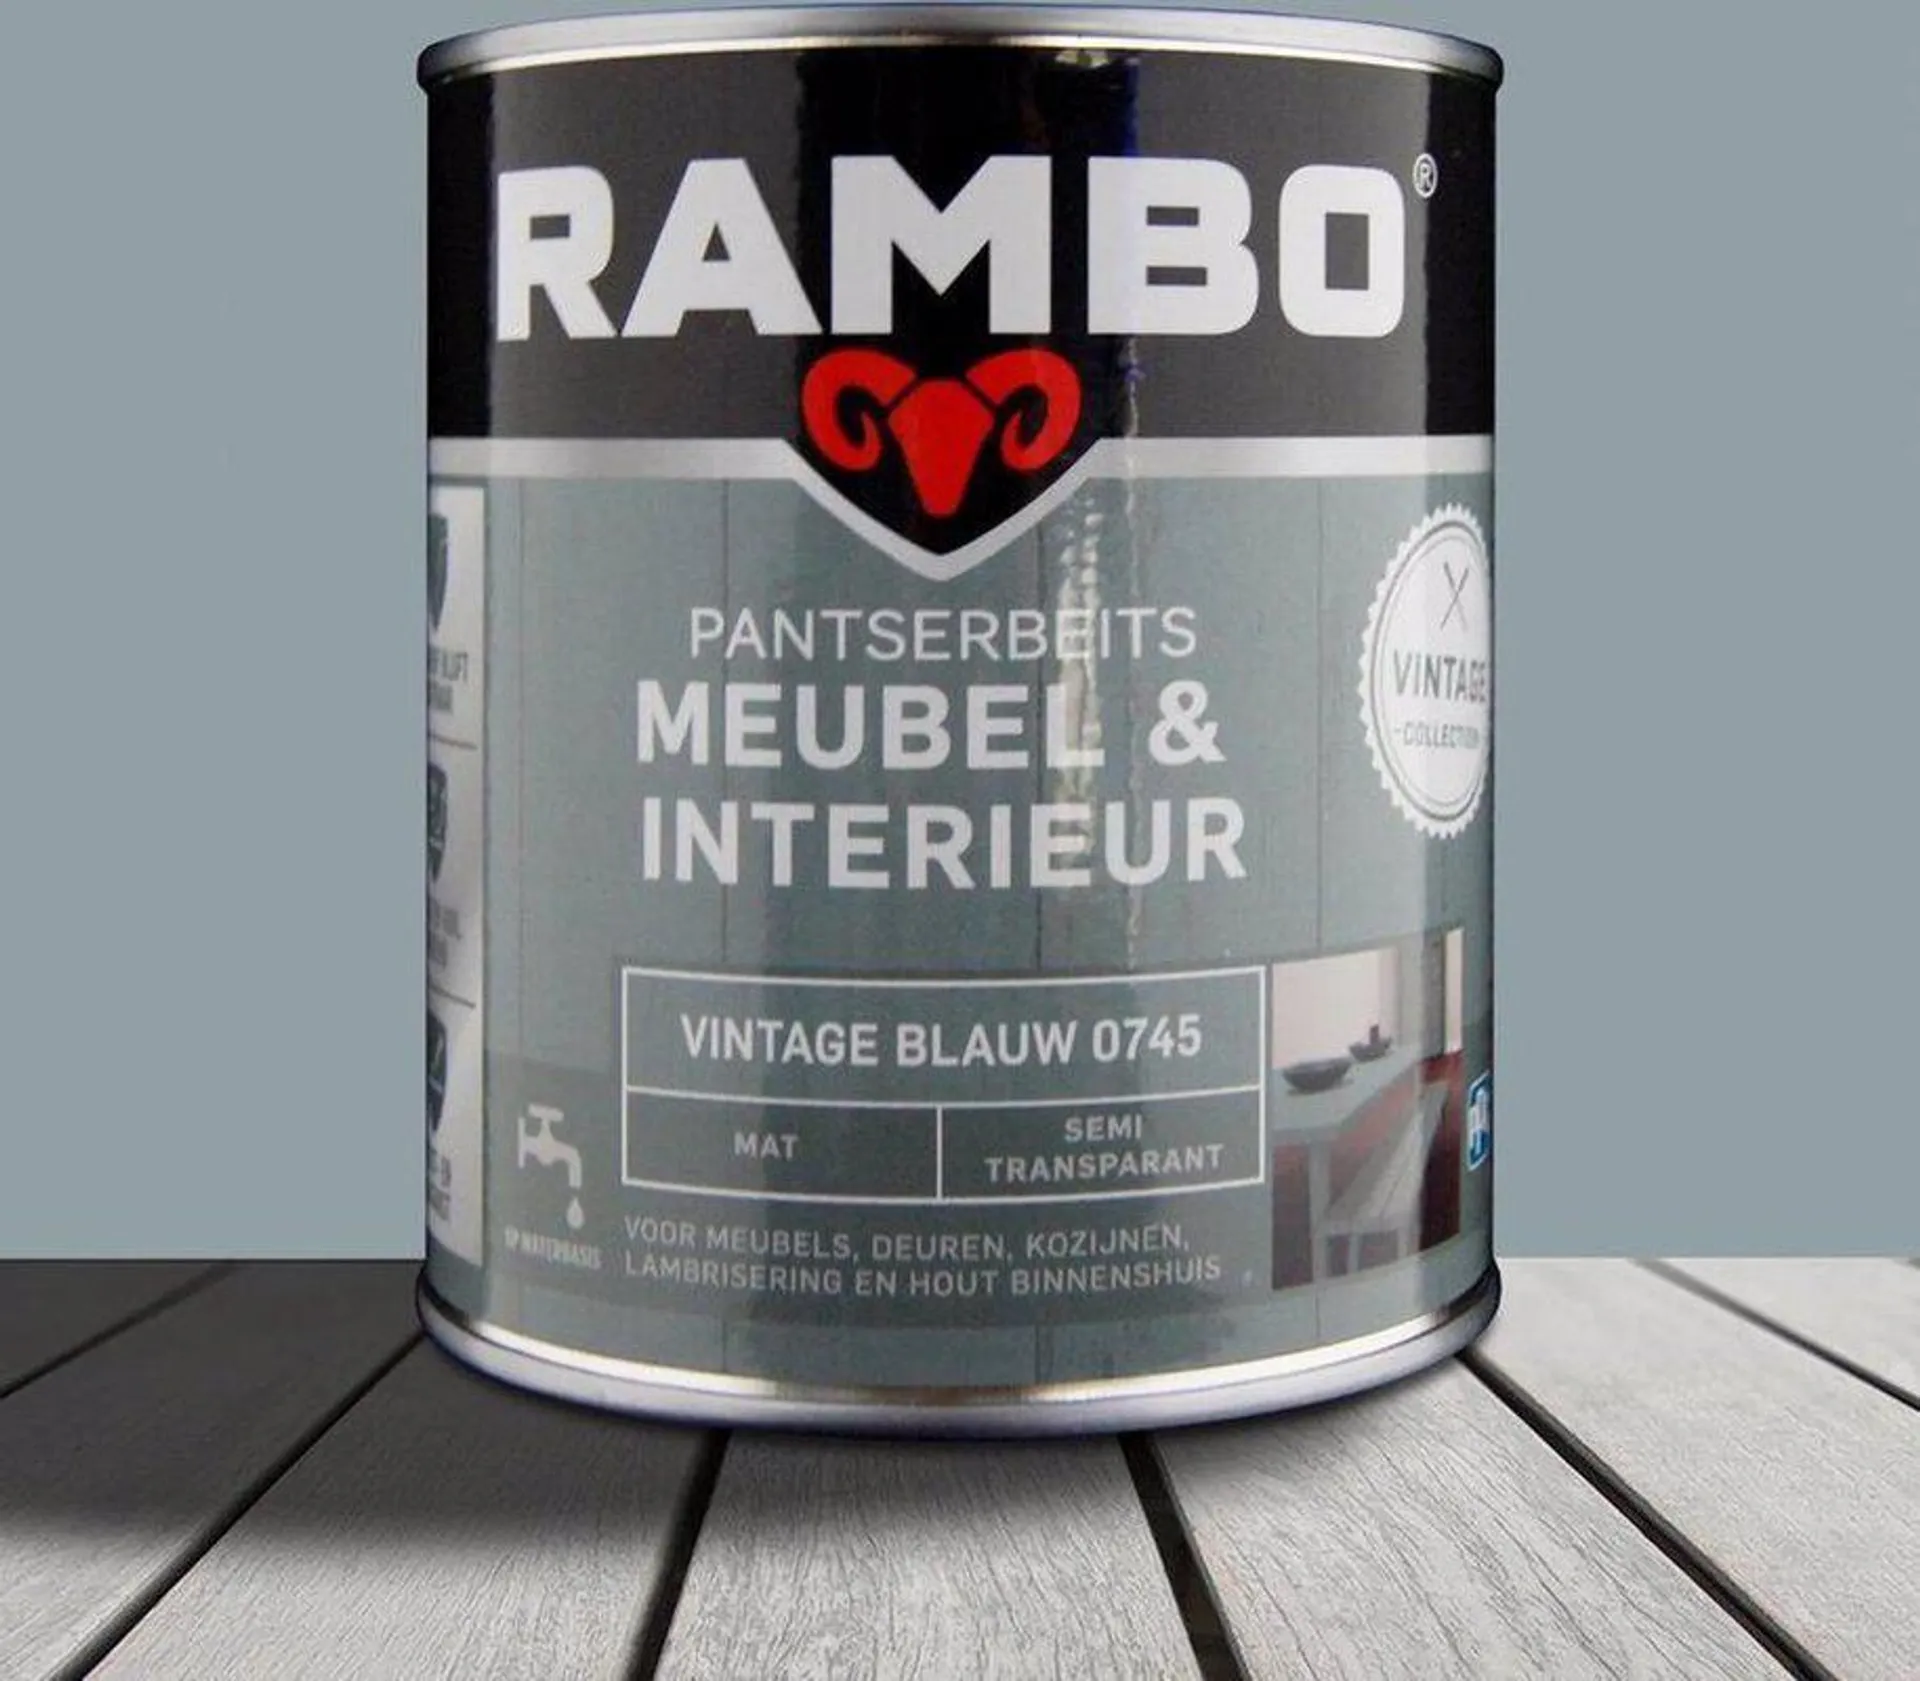 Rambo Pantserbeits Meubel & Interieur Vintage Blauw 0745